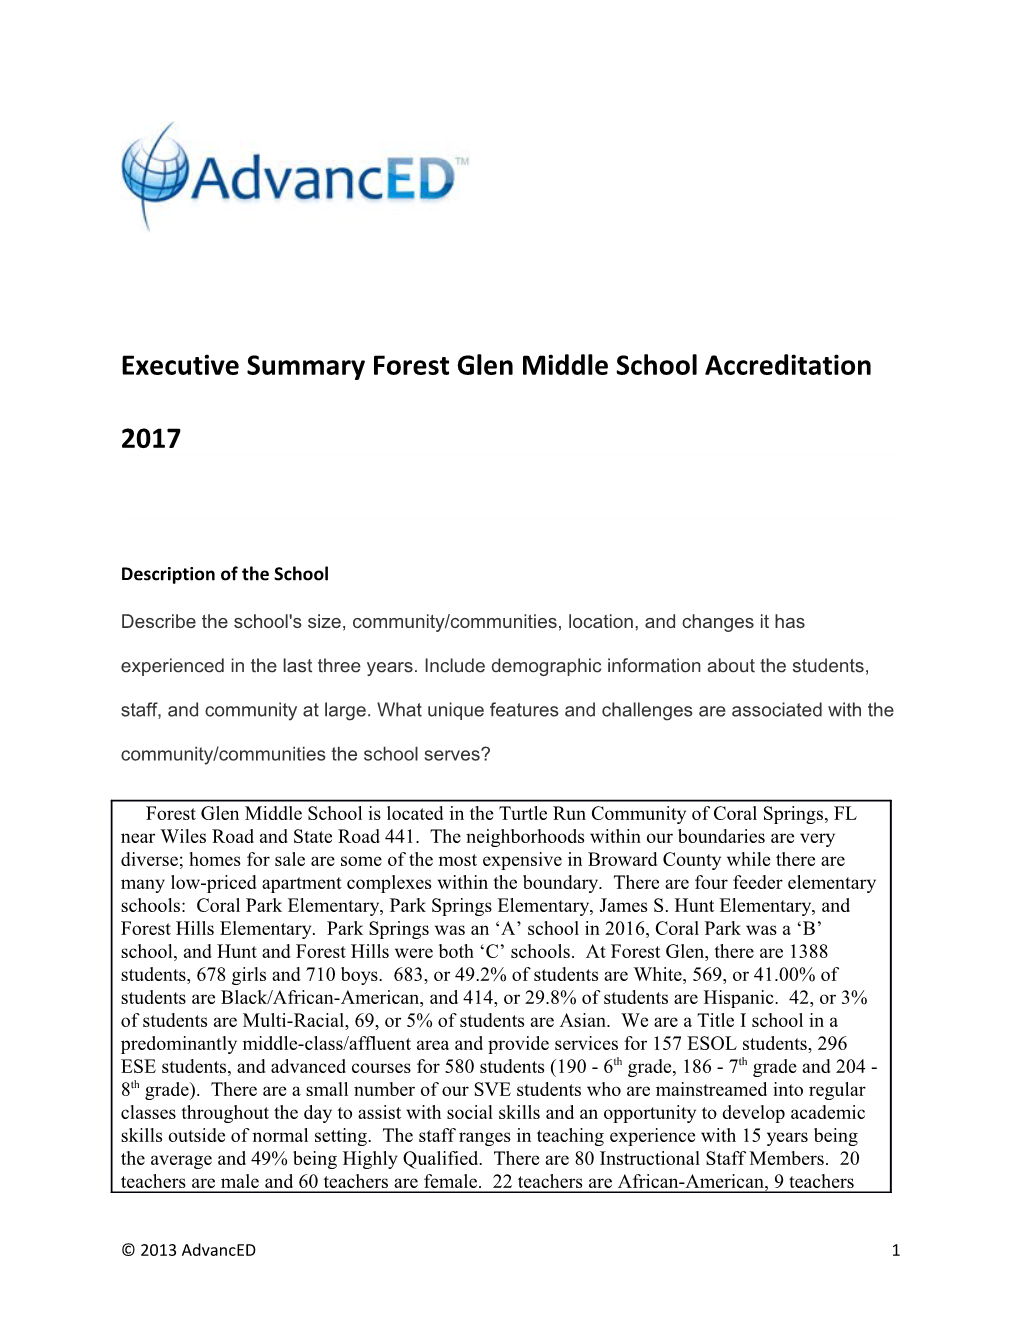 Executive Summary Forest Glen Middle School Accreditation 2017